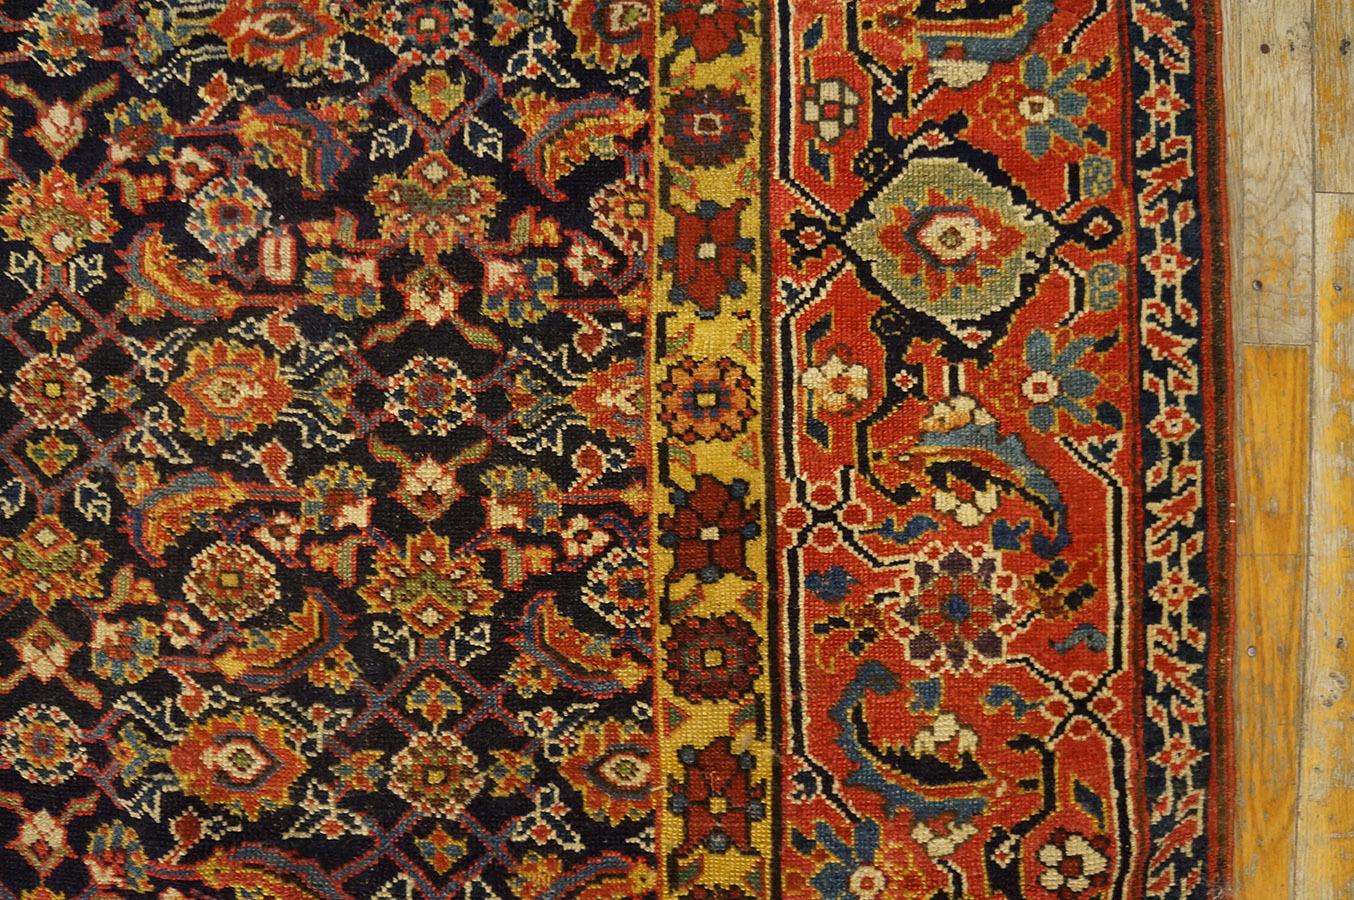 Handmade antique NW Persian carpet. Woven circa 1800 (early 19th century). Persian informal rug, size 6'2